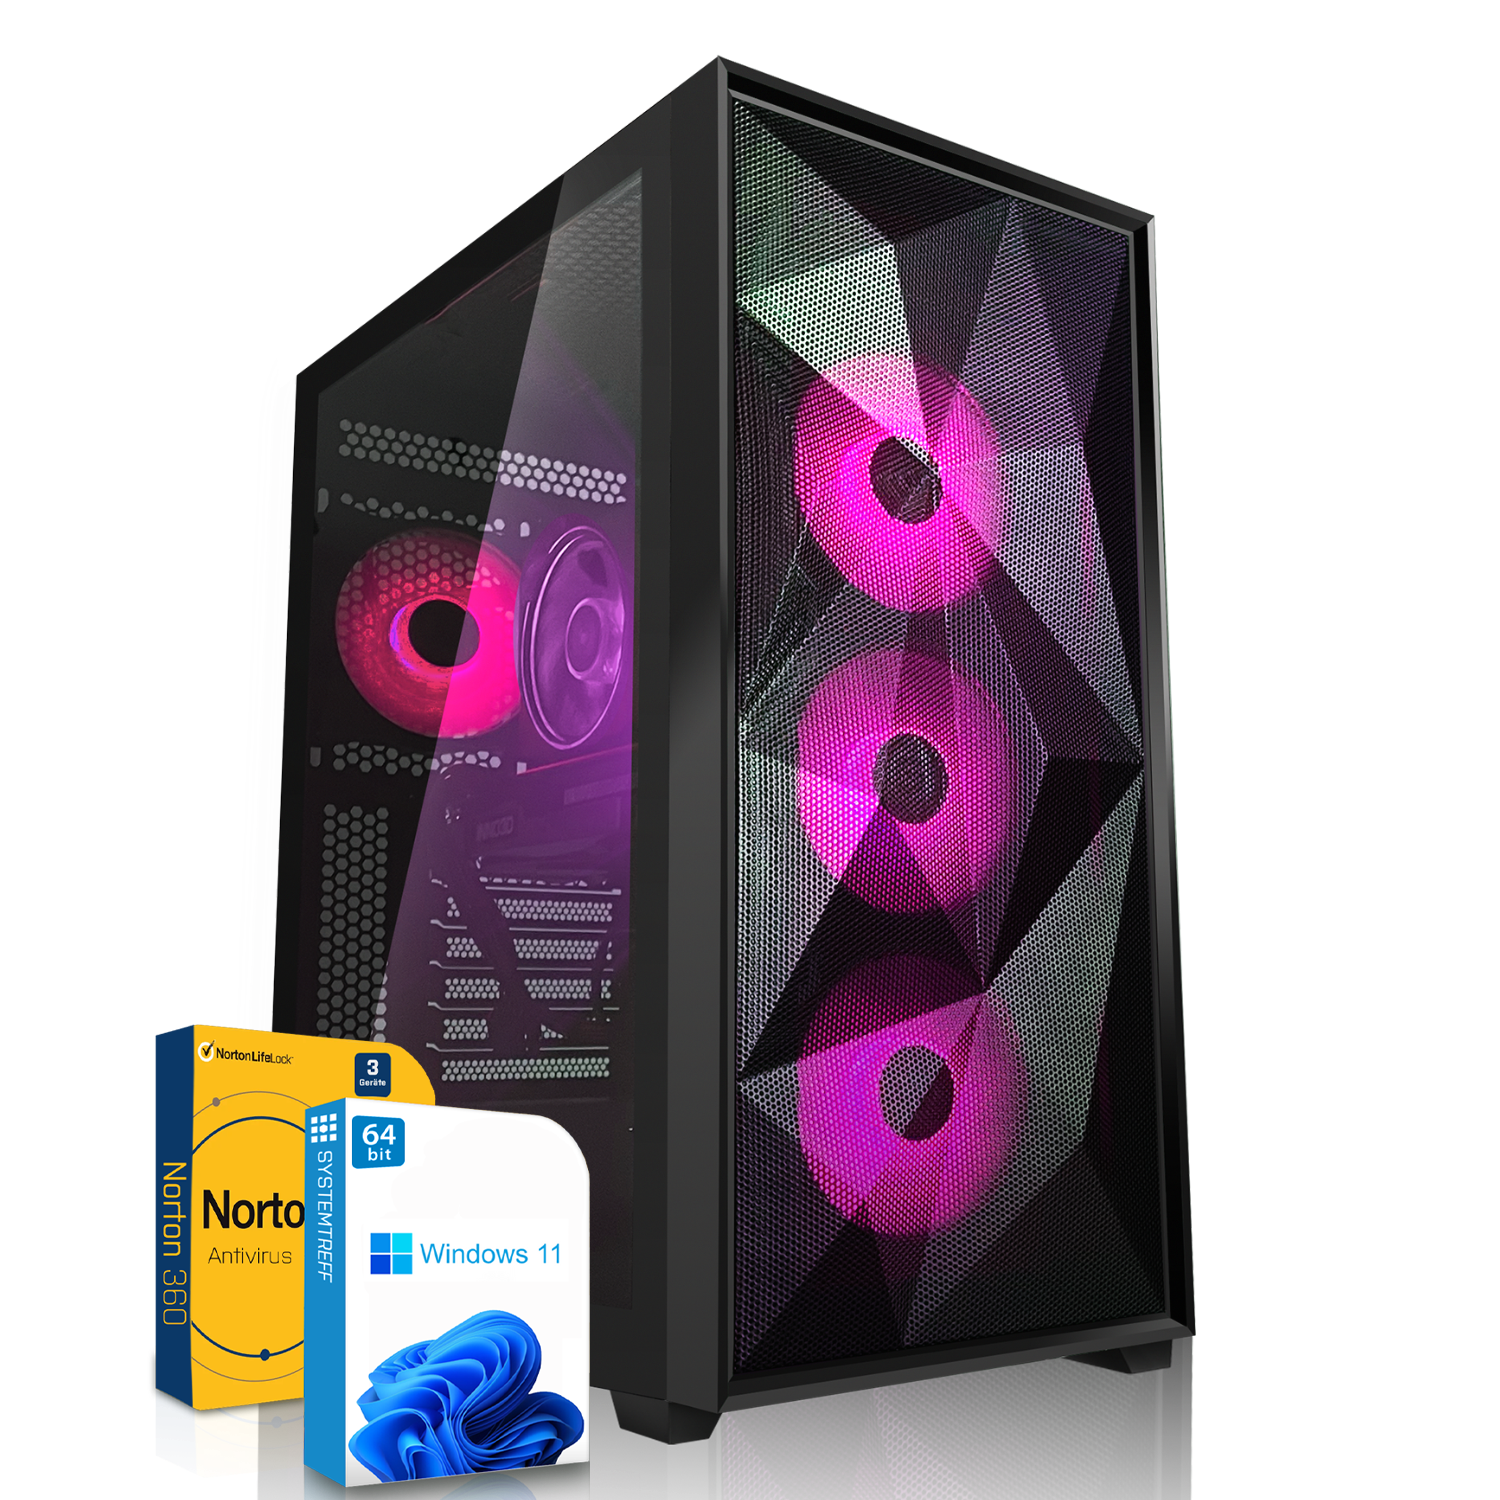 9 9 SYSTEMTREFF 1000 Radeon™ 11 GB 7900X, Prozessor, Windows Gaming 7900 XT PC AMD Gaming Pro, Ryzen Ryzen™ AMD GB High-End RX mSSD, mit RAM, 32 AMD